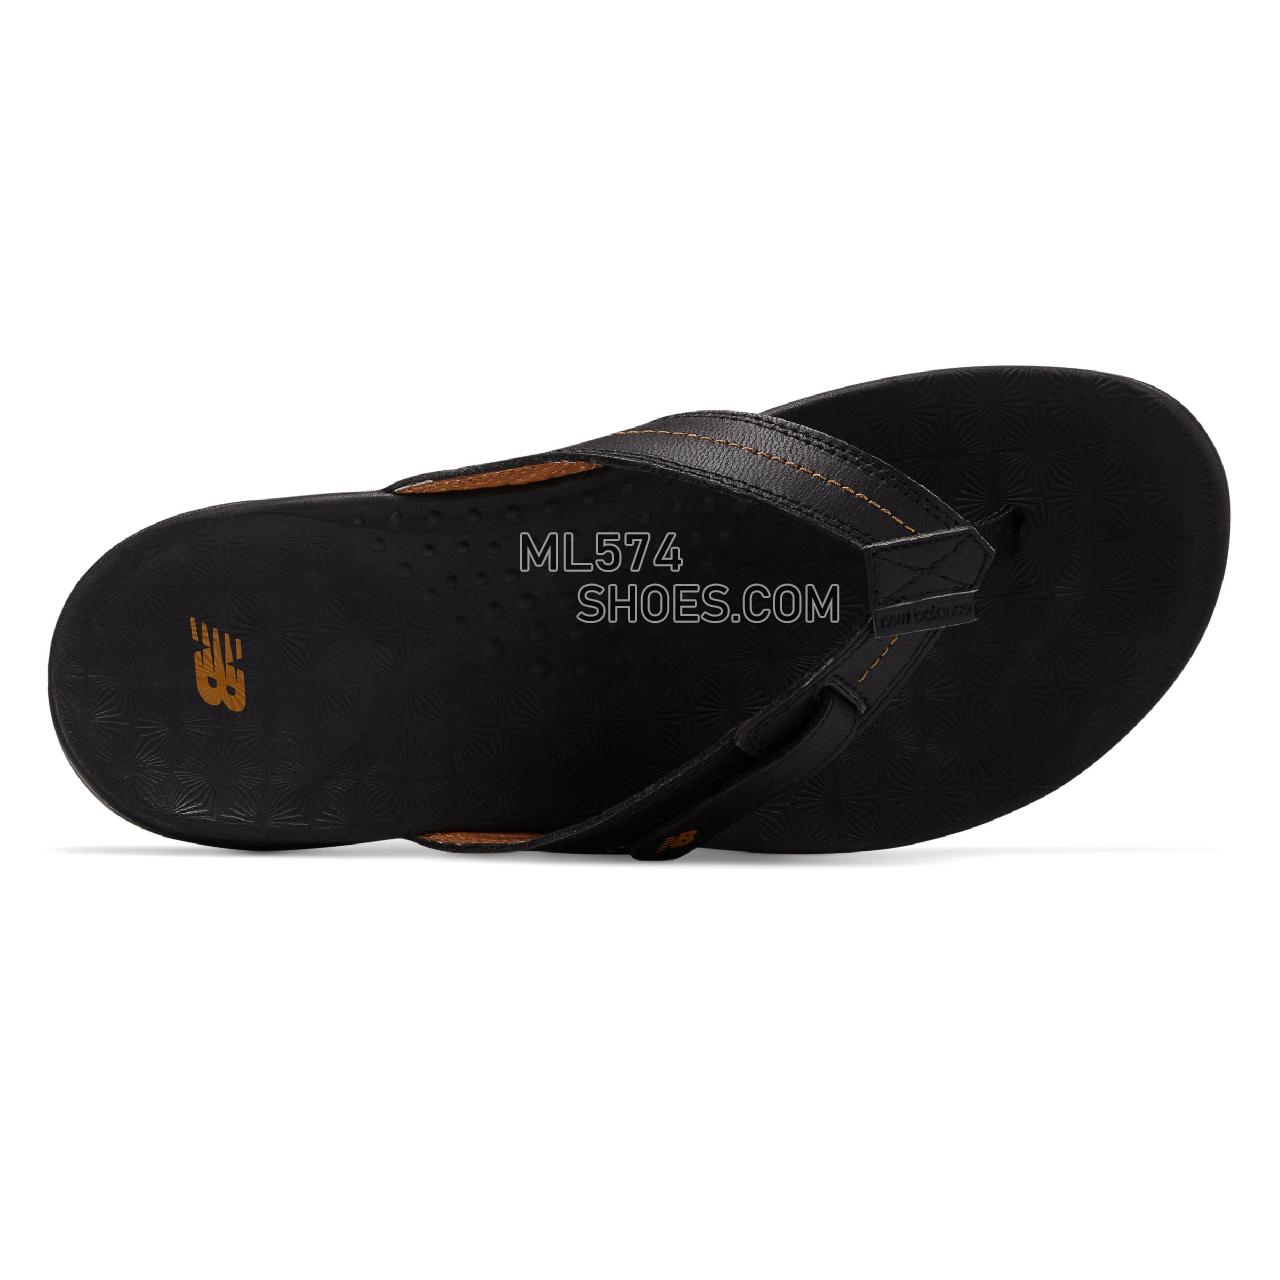 New Balance Voyager Thong - Women's 6102 - Sandals Black - WR6102BK